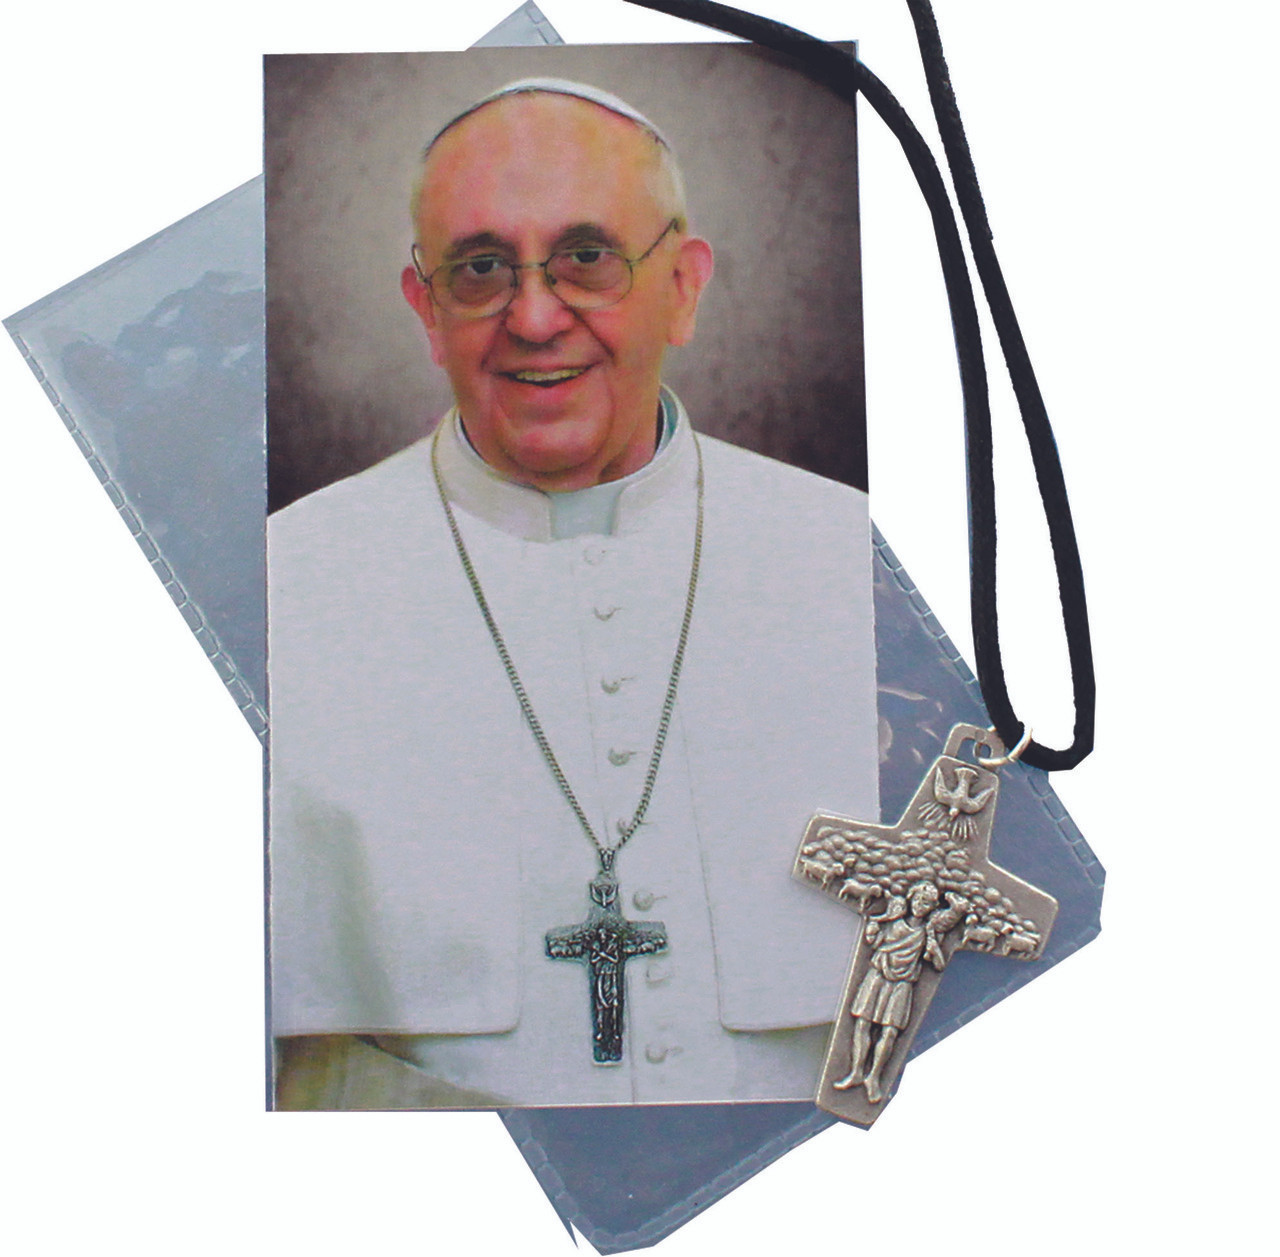 96/38, papal pectoral cross, good and his lambs, the good shepherd lambs, pope cross, Pope Francis pectoral cross